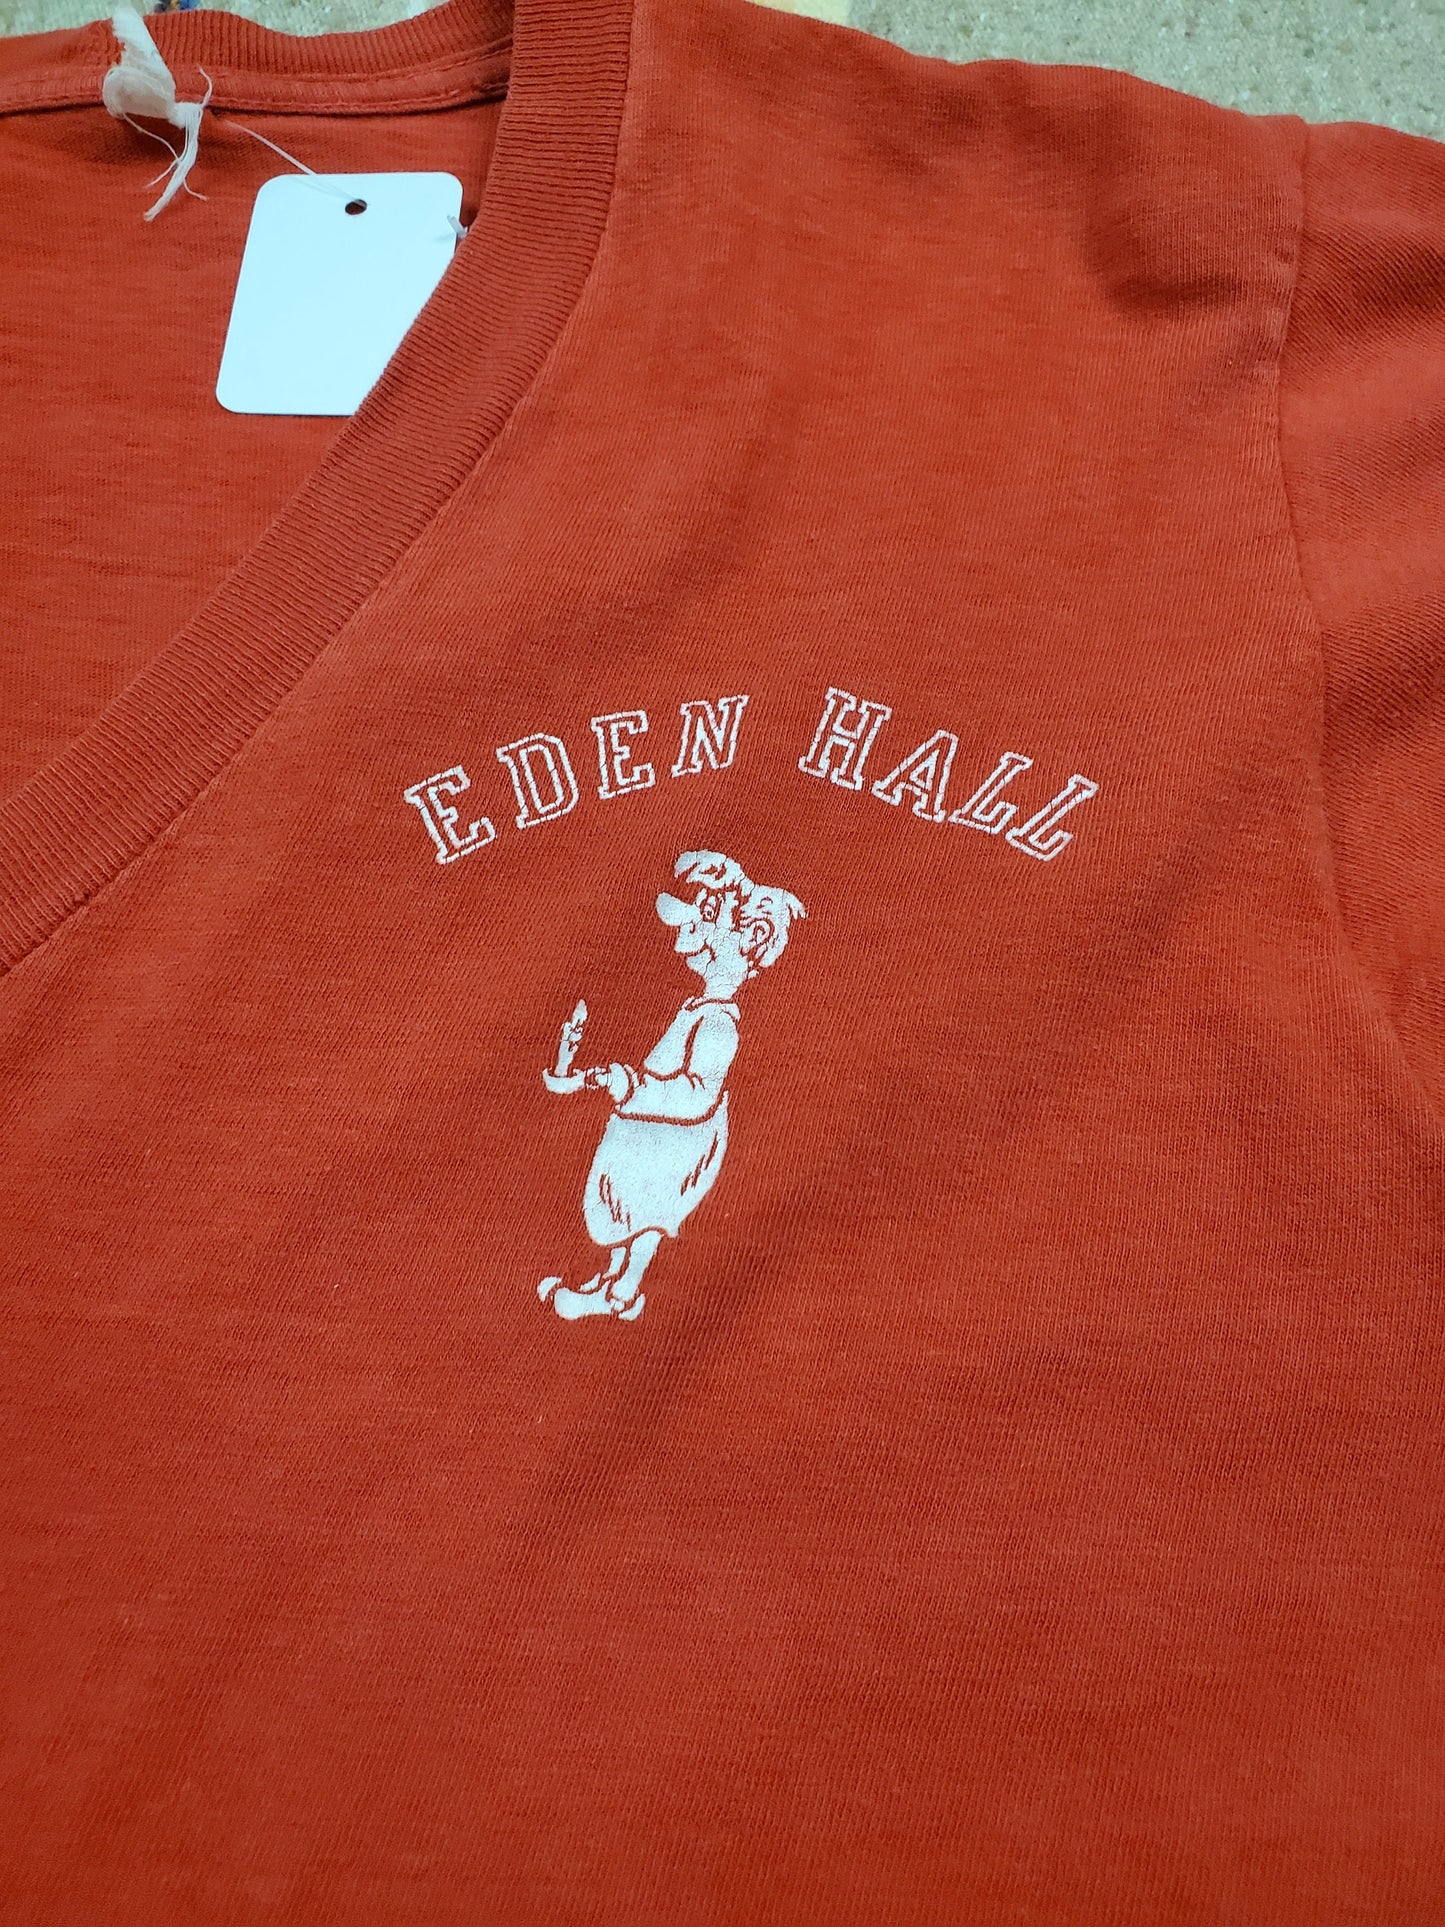 1980s/1990s Cropped Eden Hall V-Neck T-Shirt Size M